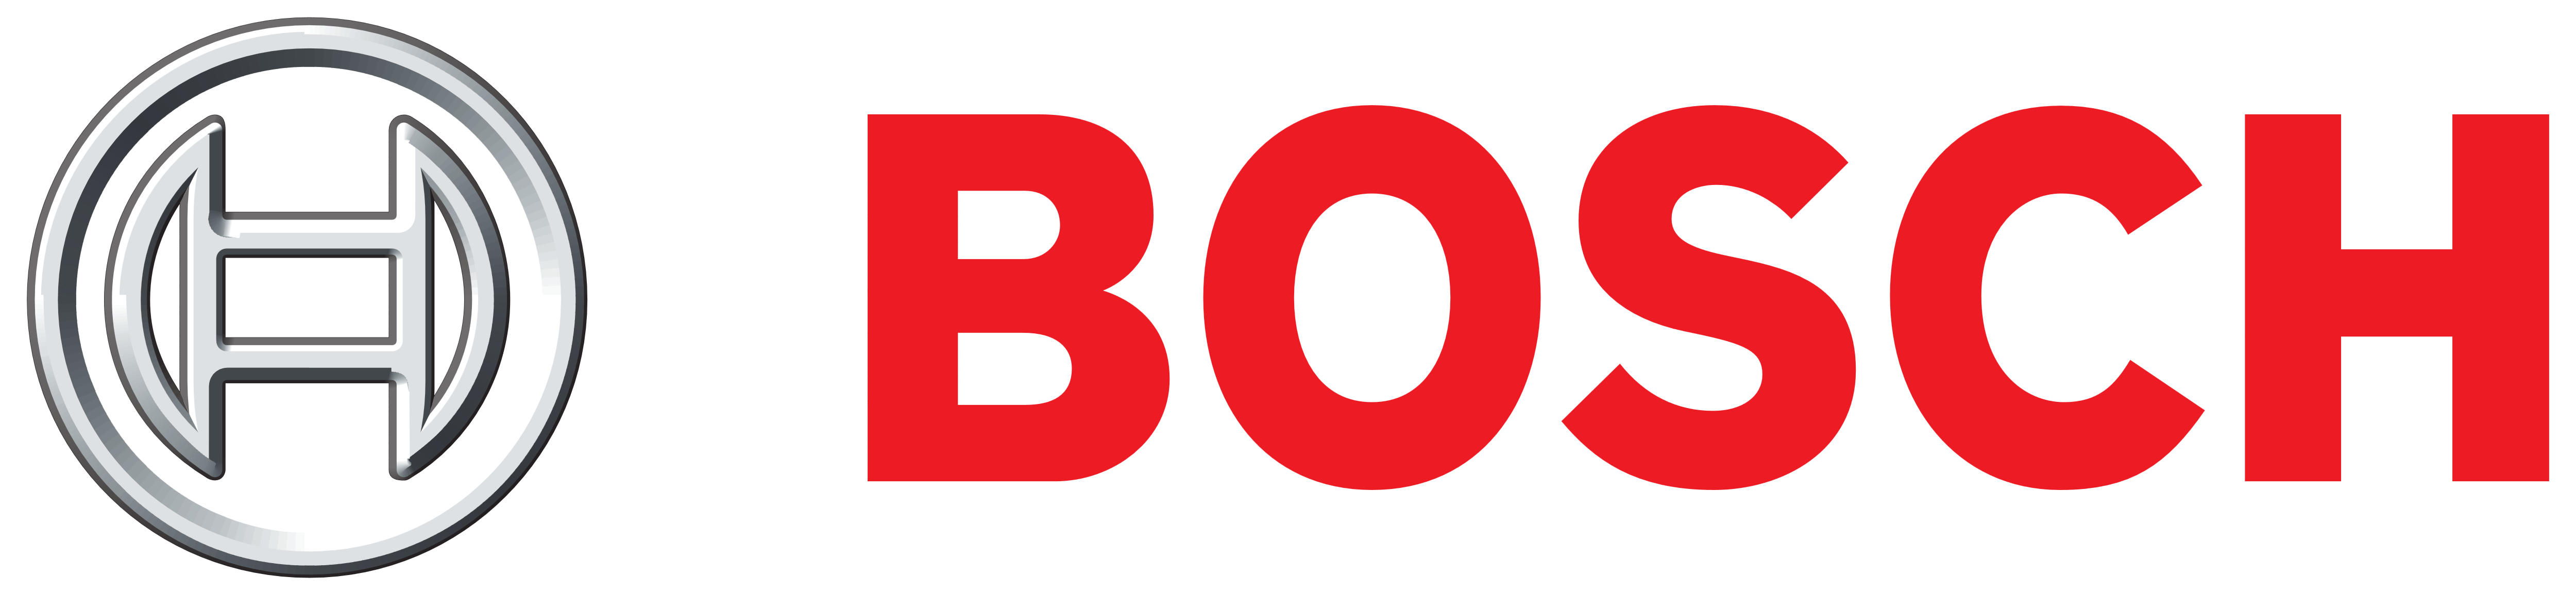 Bosch Logo PNG - 176169